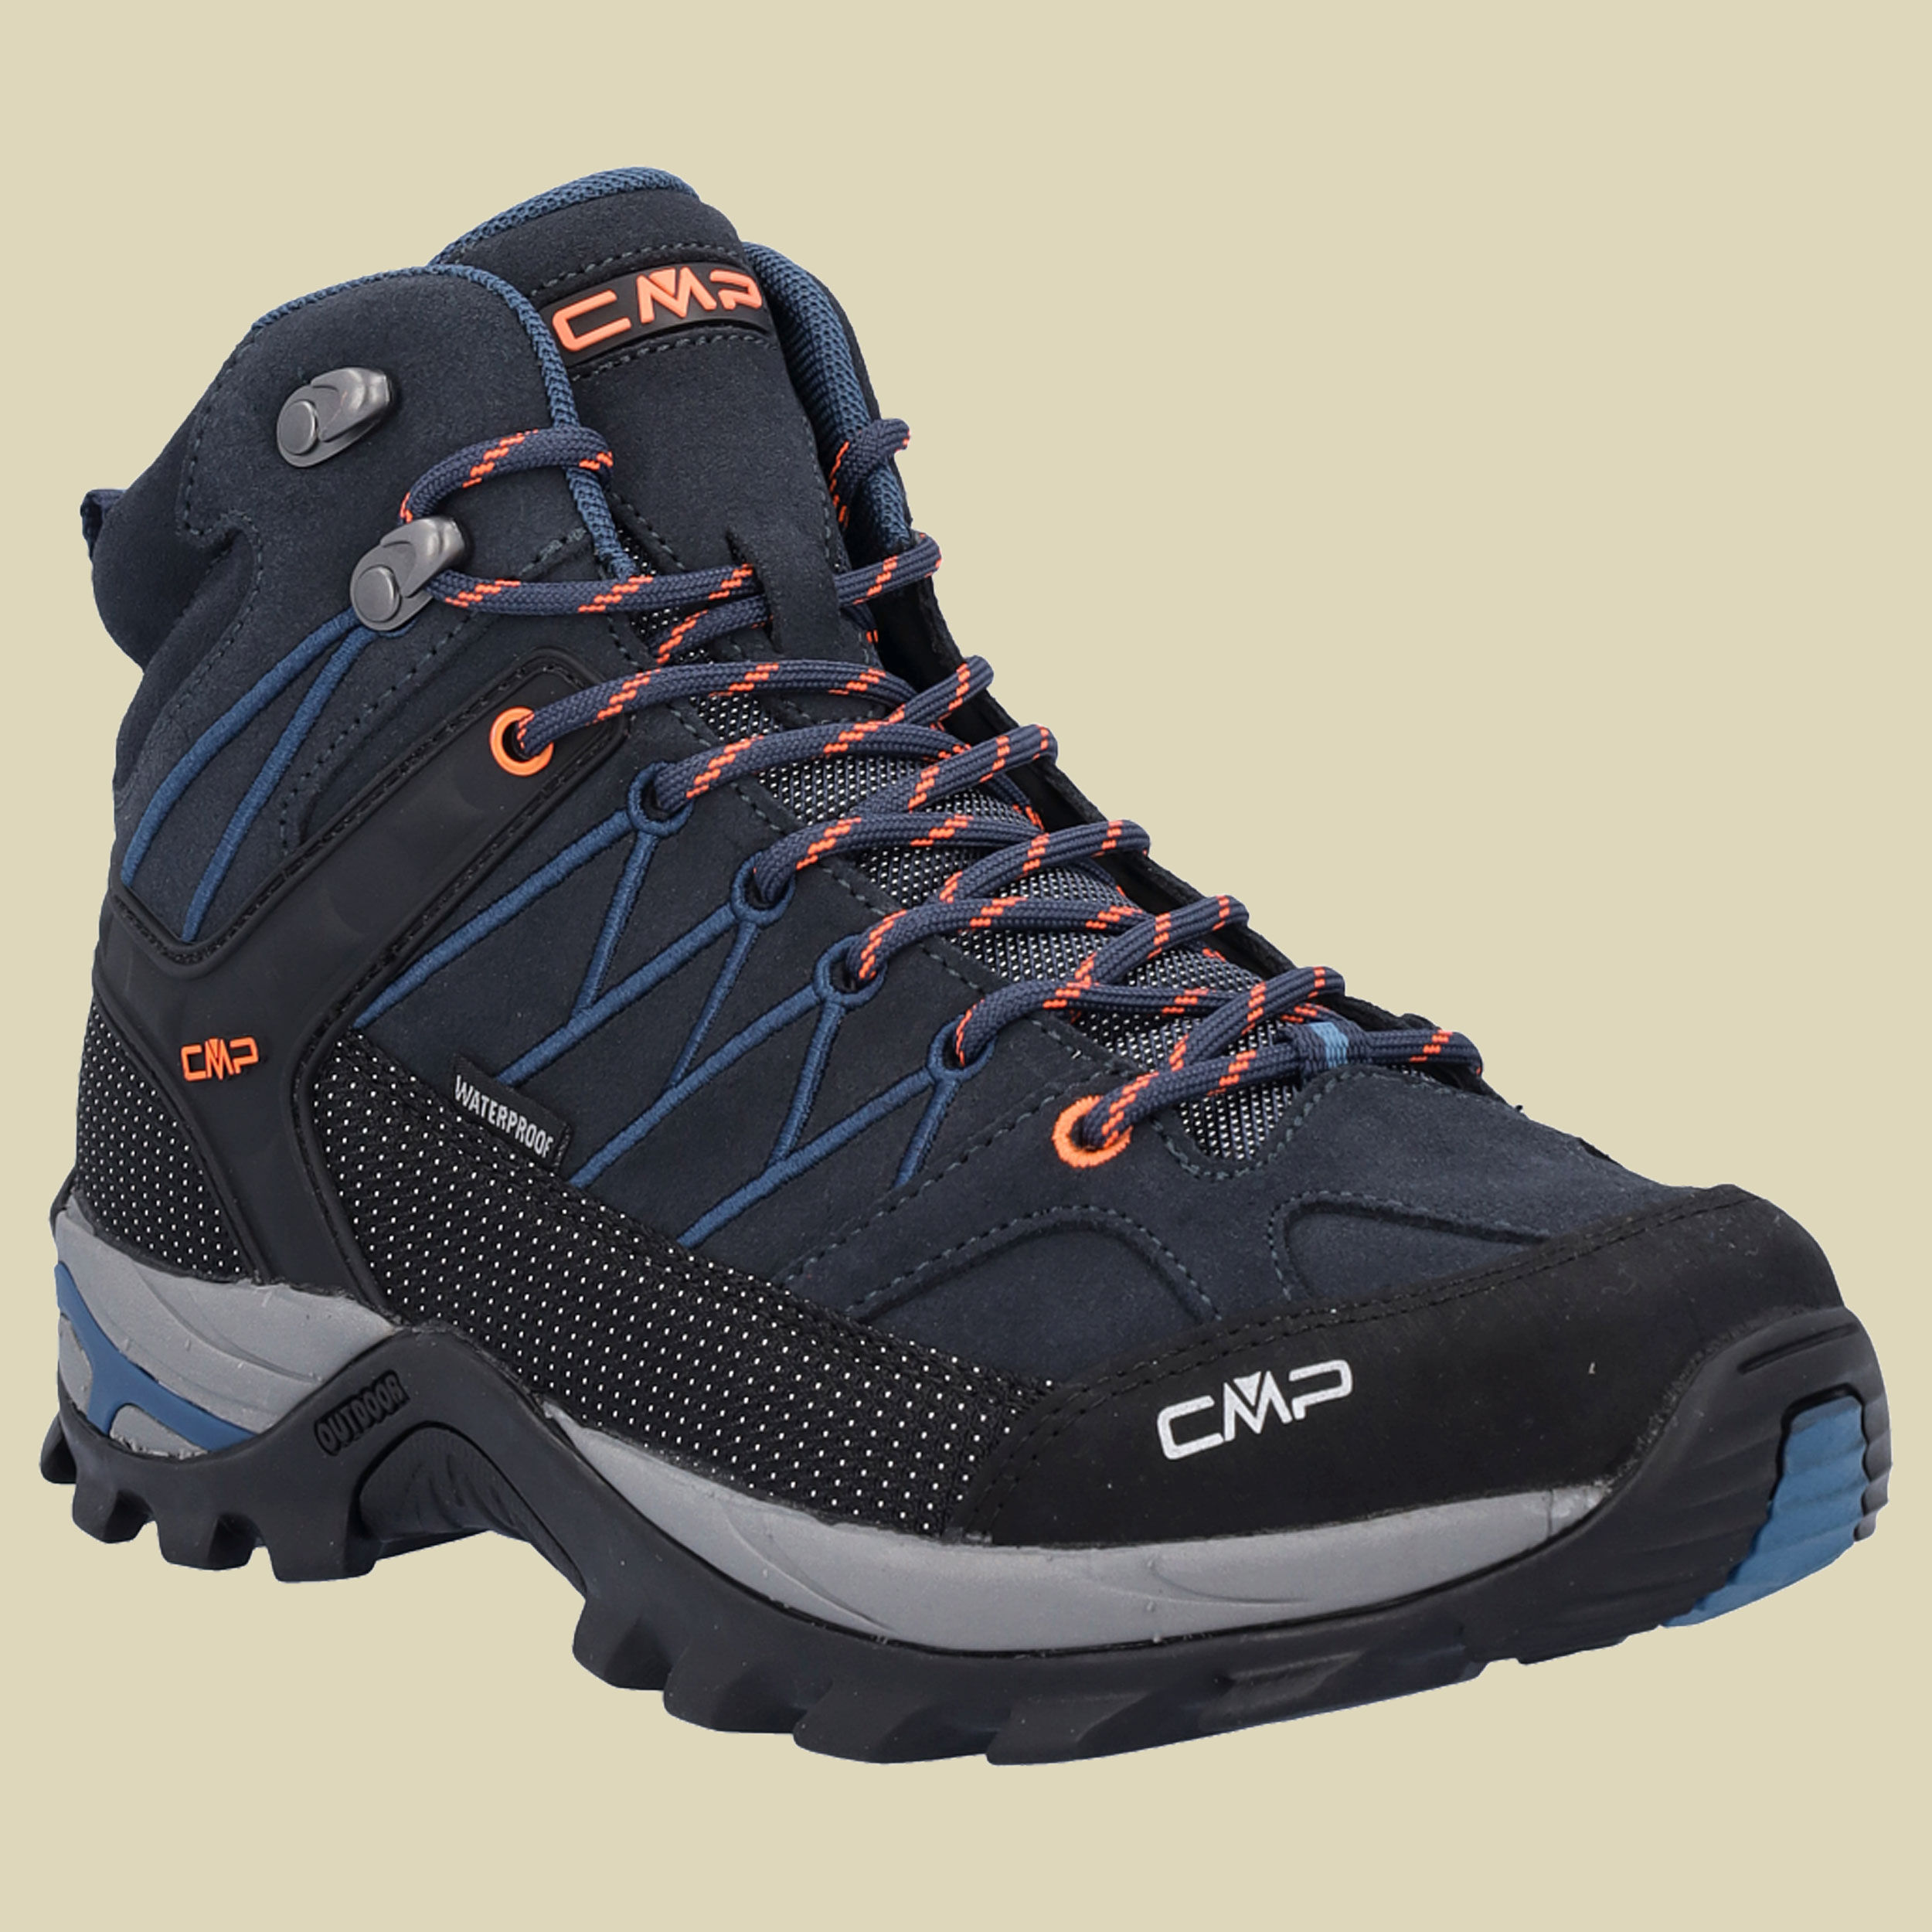 CMP Rigel Mid Trekking Shoes WP Men Größe 45 Farbe 27NM b.blue-flash orange